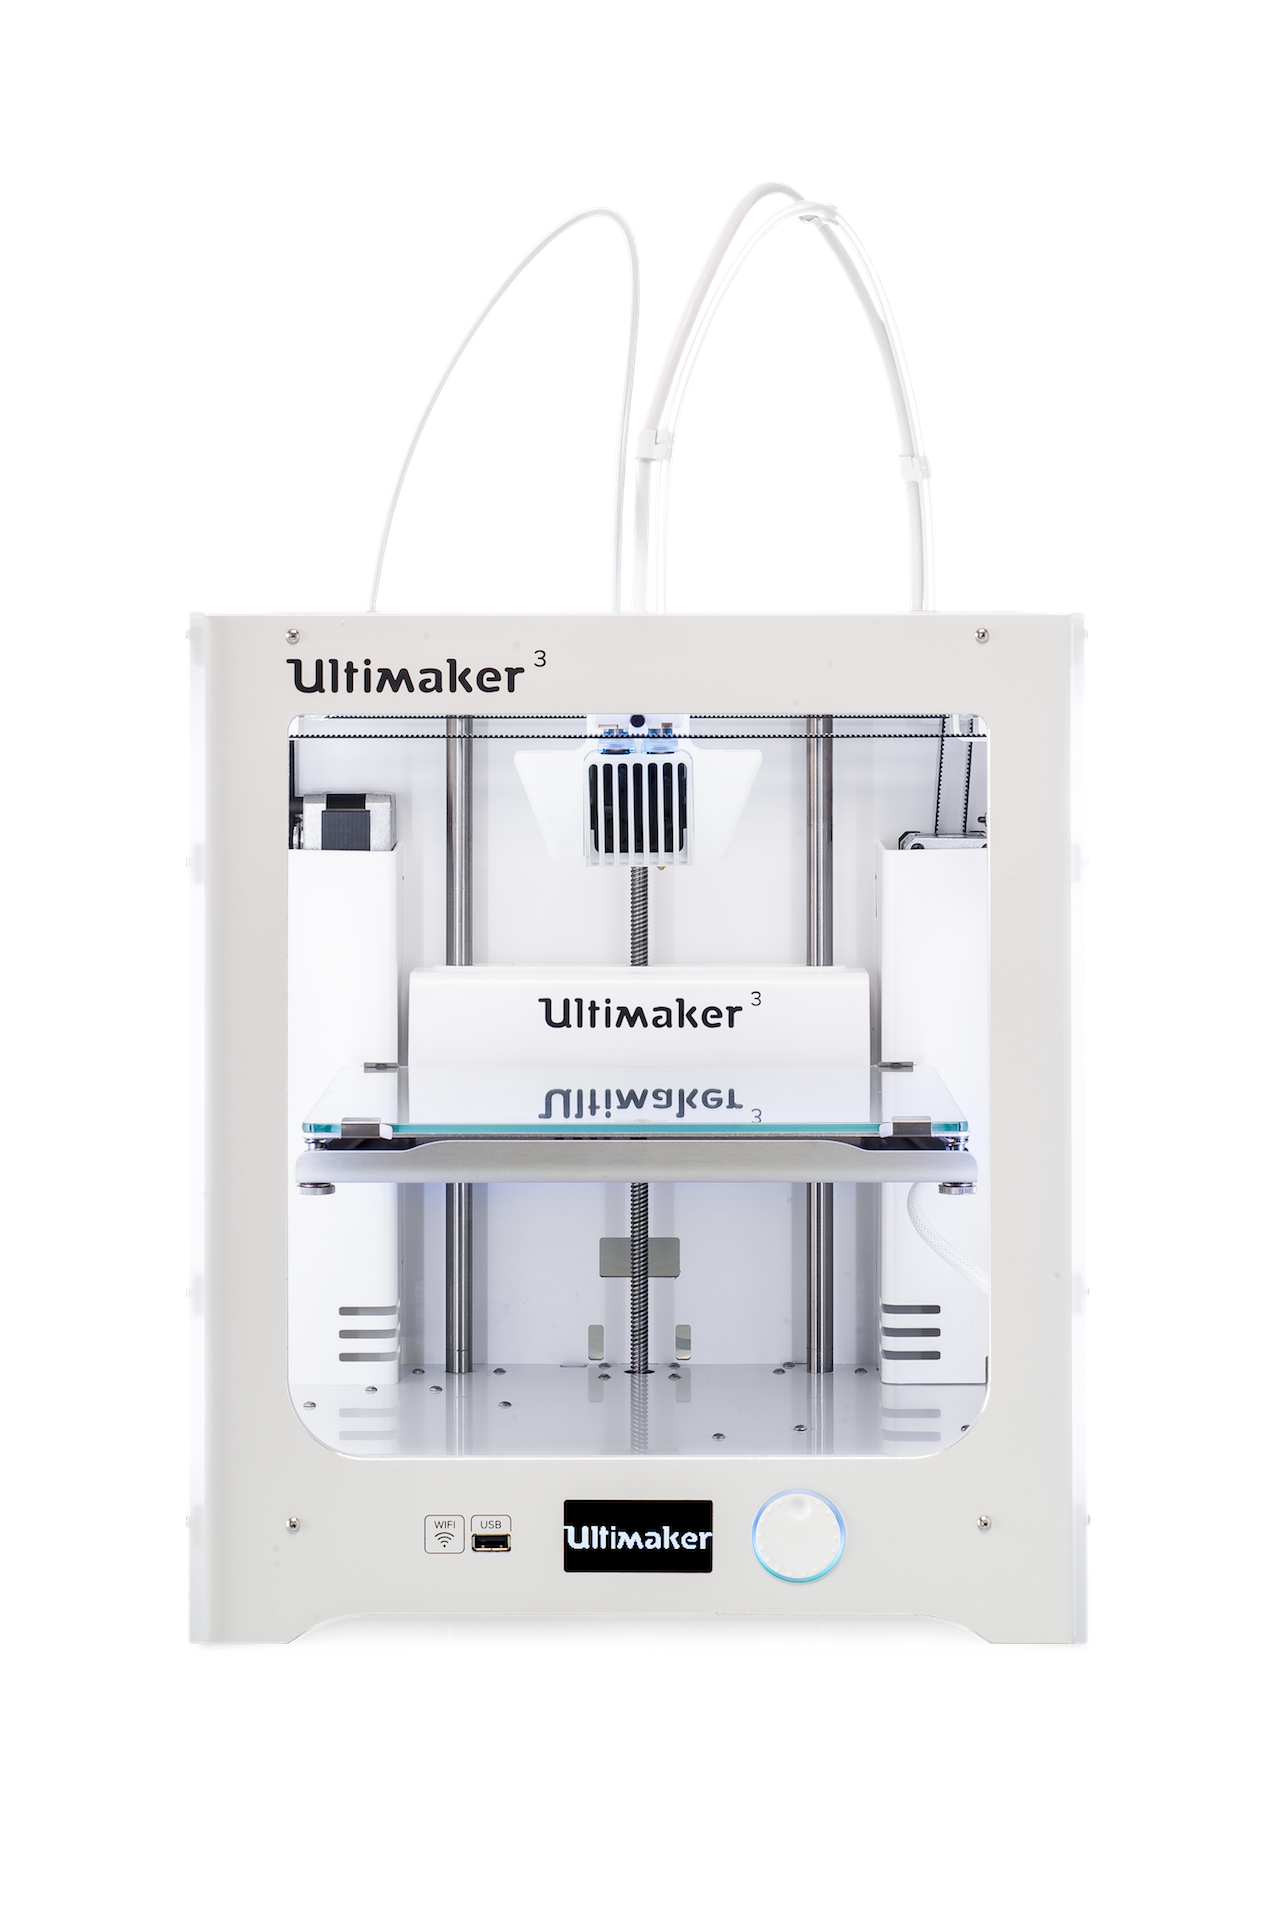  The new Ultimaker 3 desktop 3D printer 